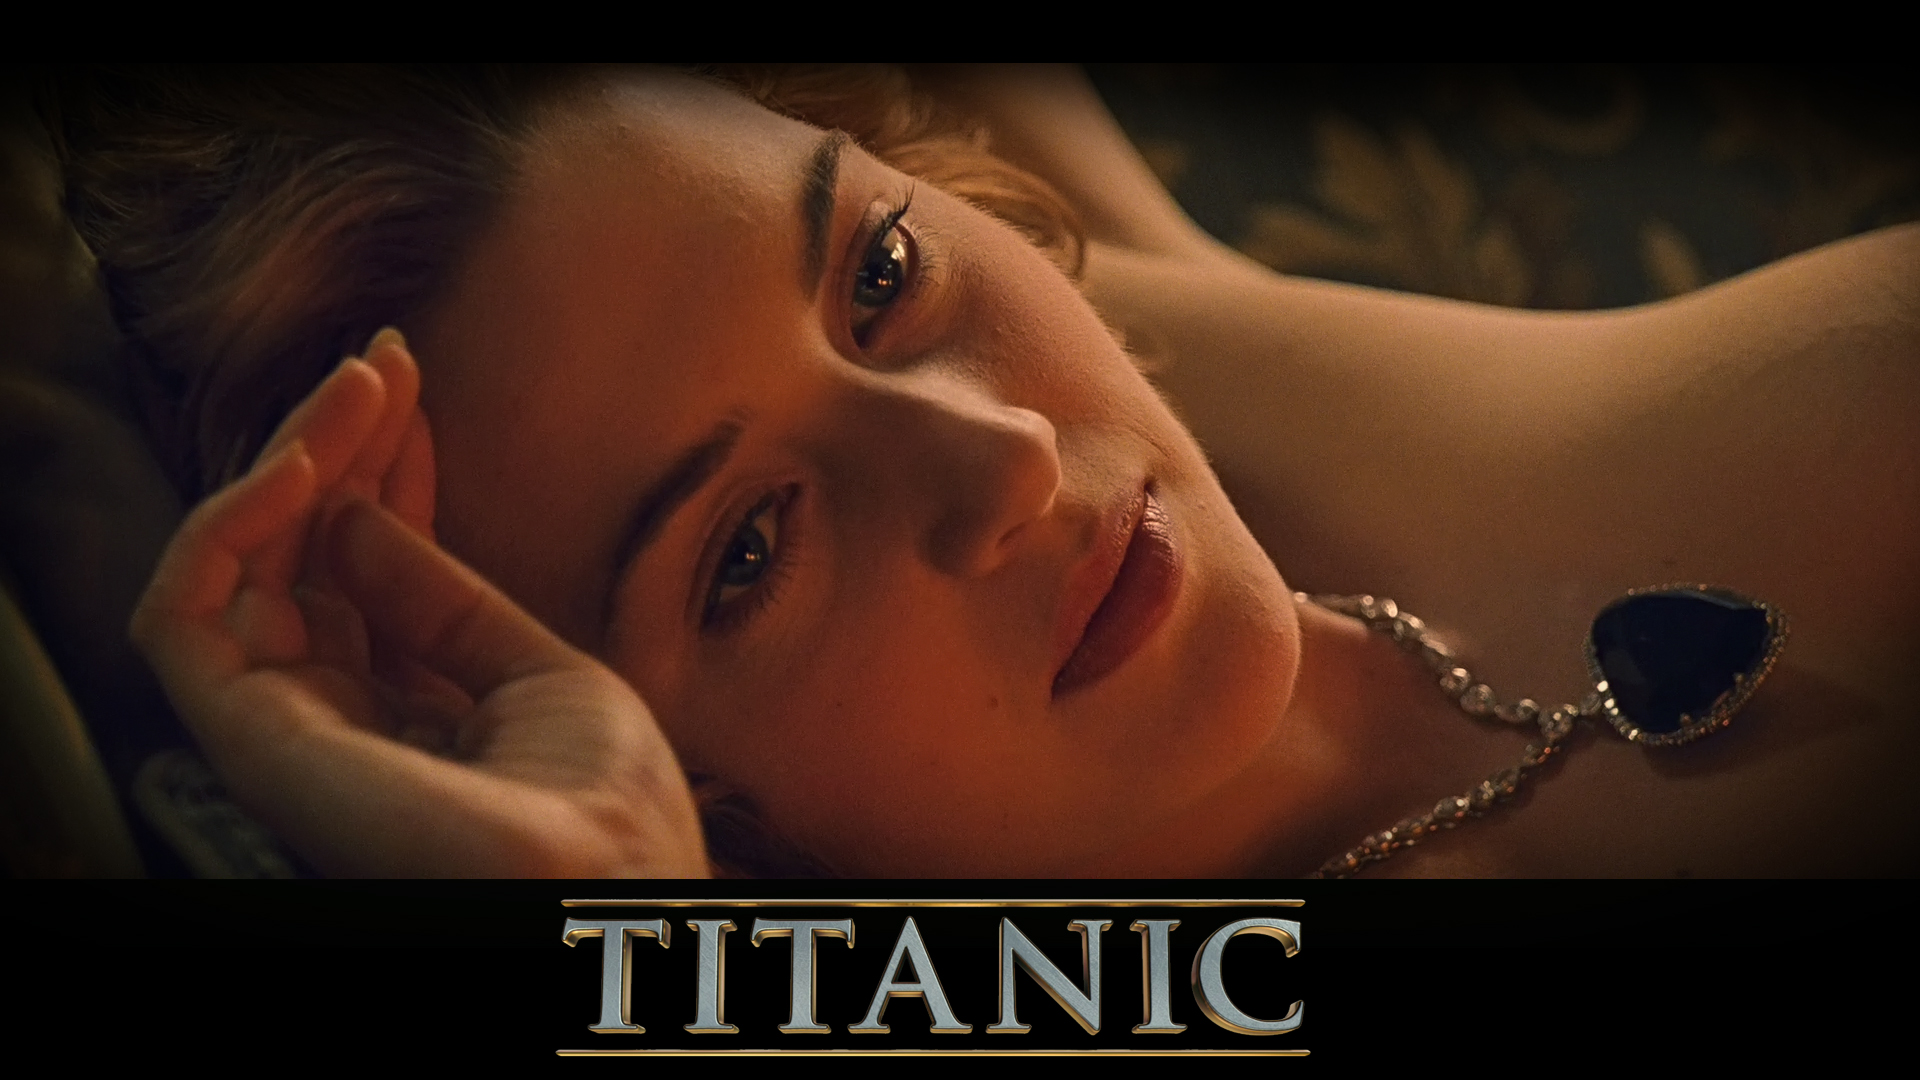 inaktive Fjord århundrede 77+] Kate Winslet Wallpapers Titanic - WallpaperSafari